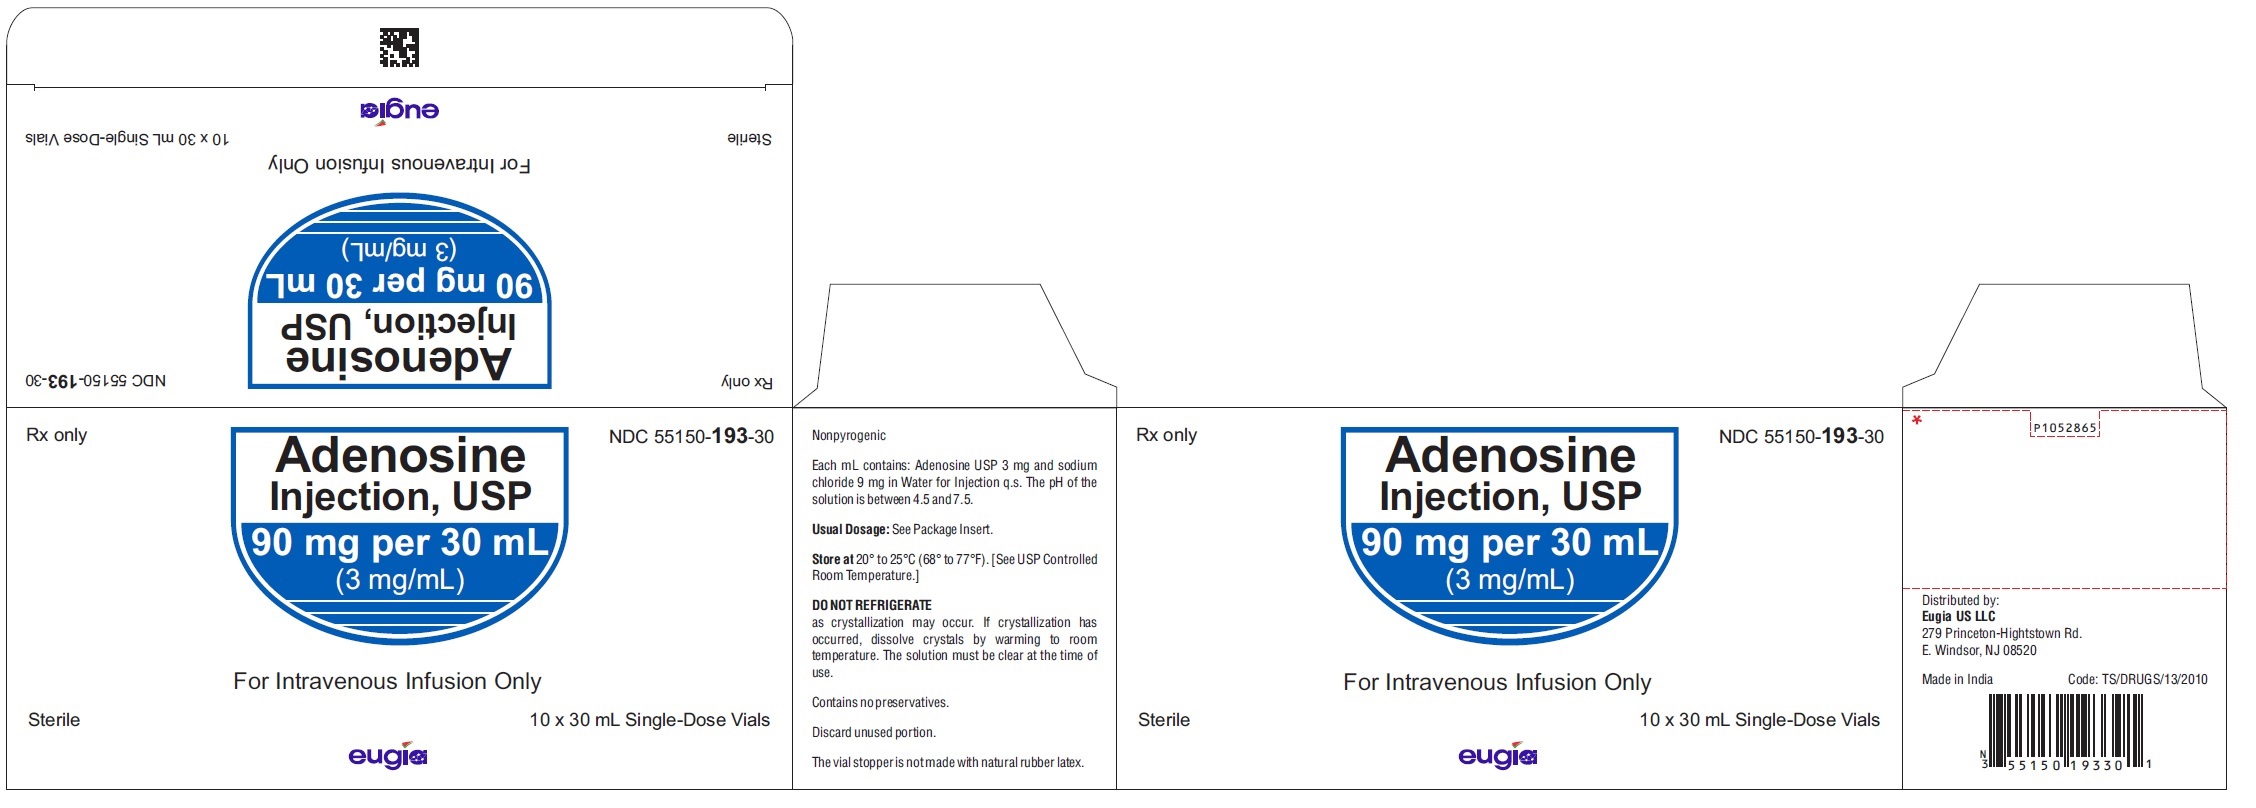 PACKAGE LABEL-PRINCIPAL DISPLAY PANEL - 90 mg per 30 mL (3 mg/mL) - Container-Carton (10 Vial)